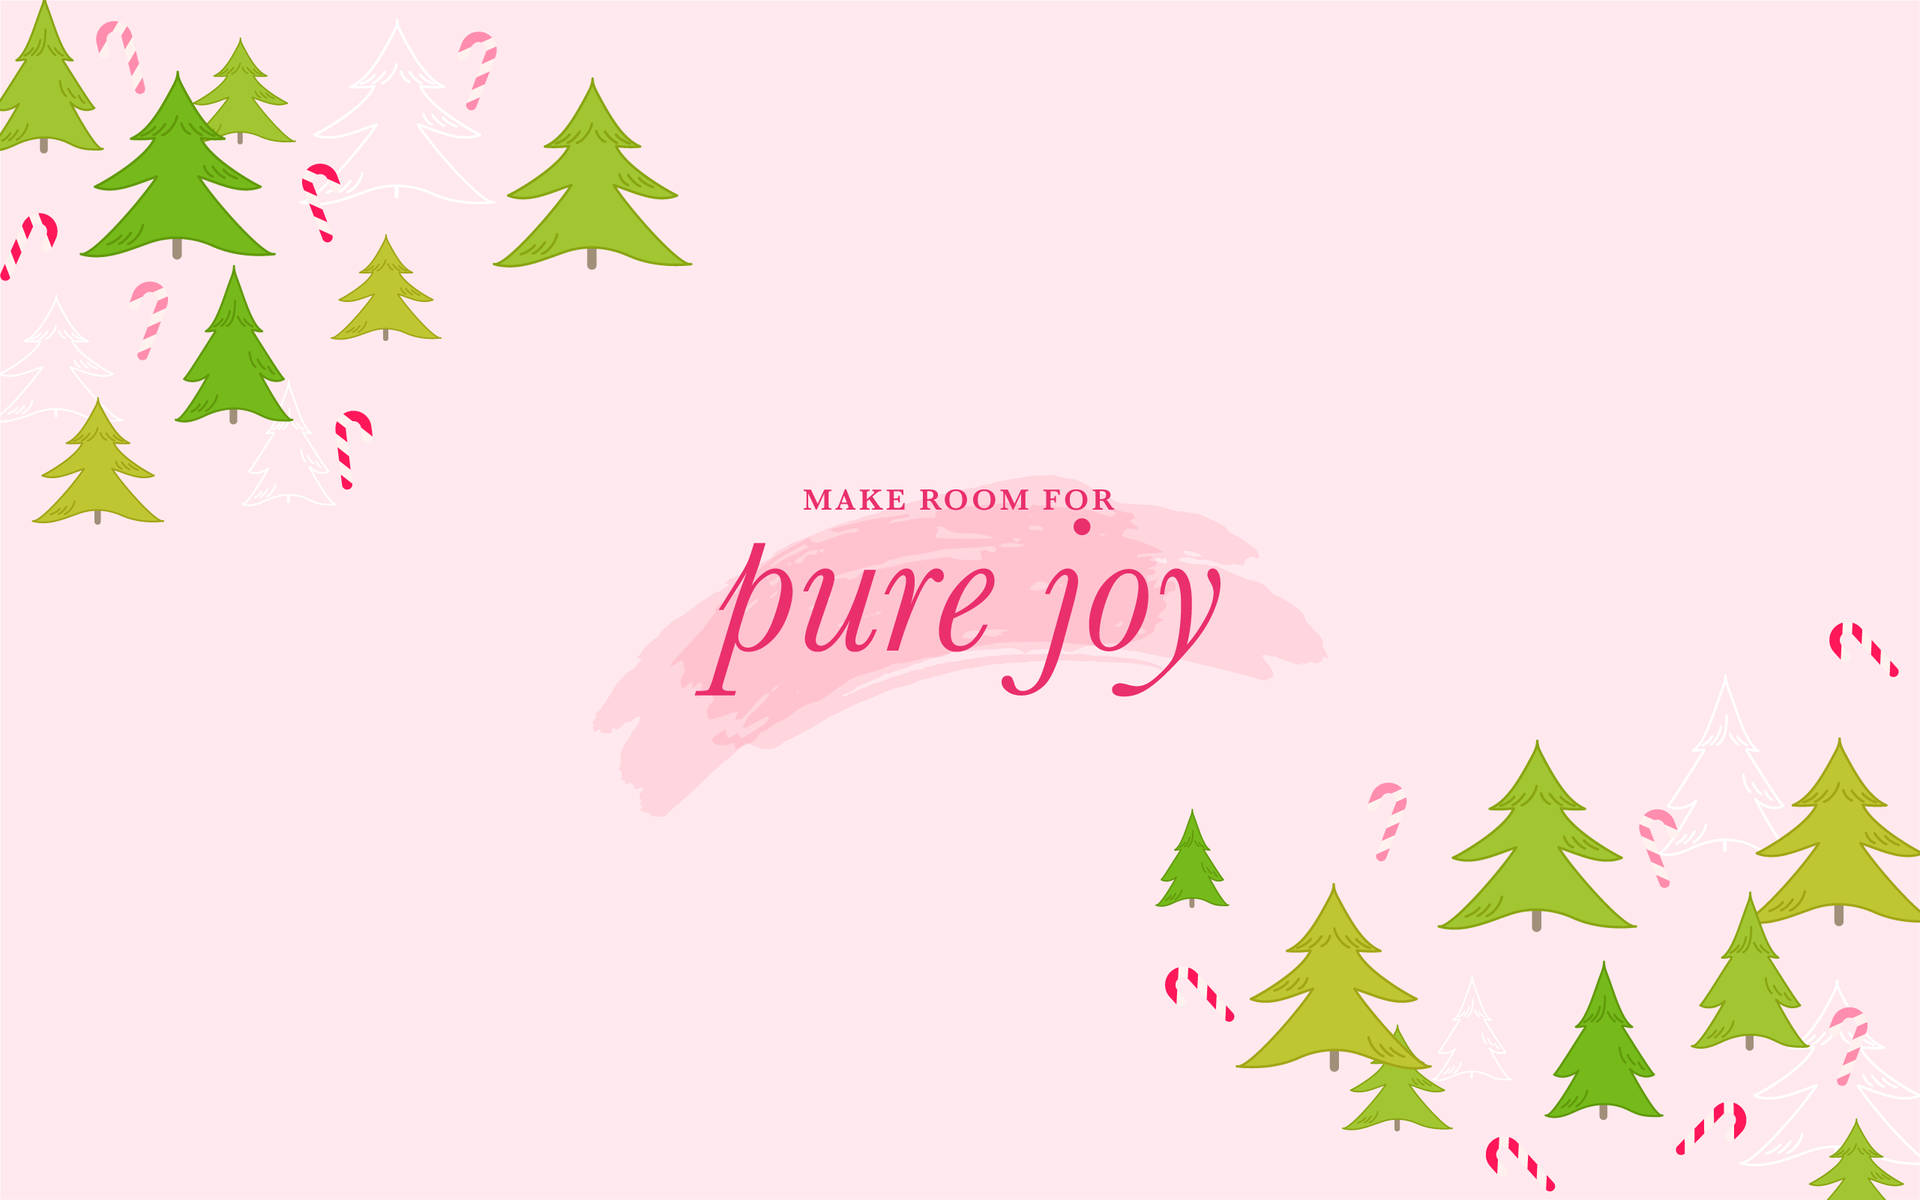 Pure Joy Pines Background